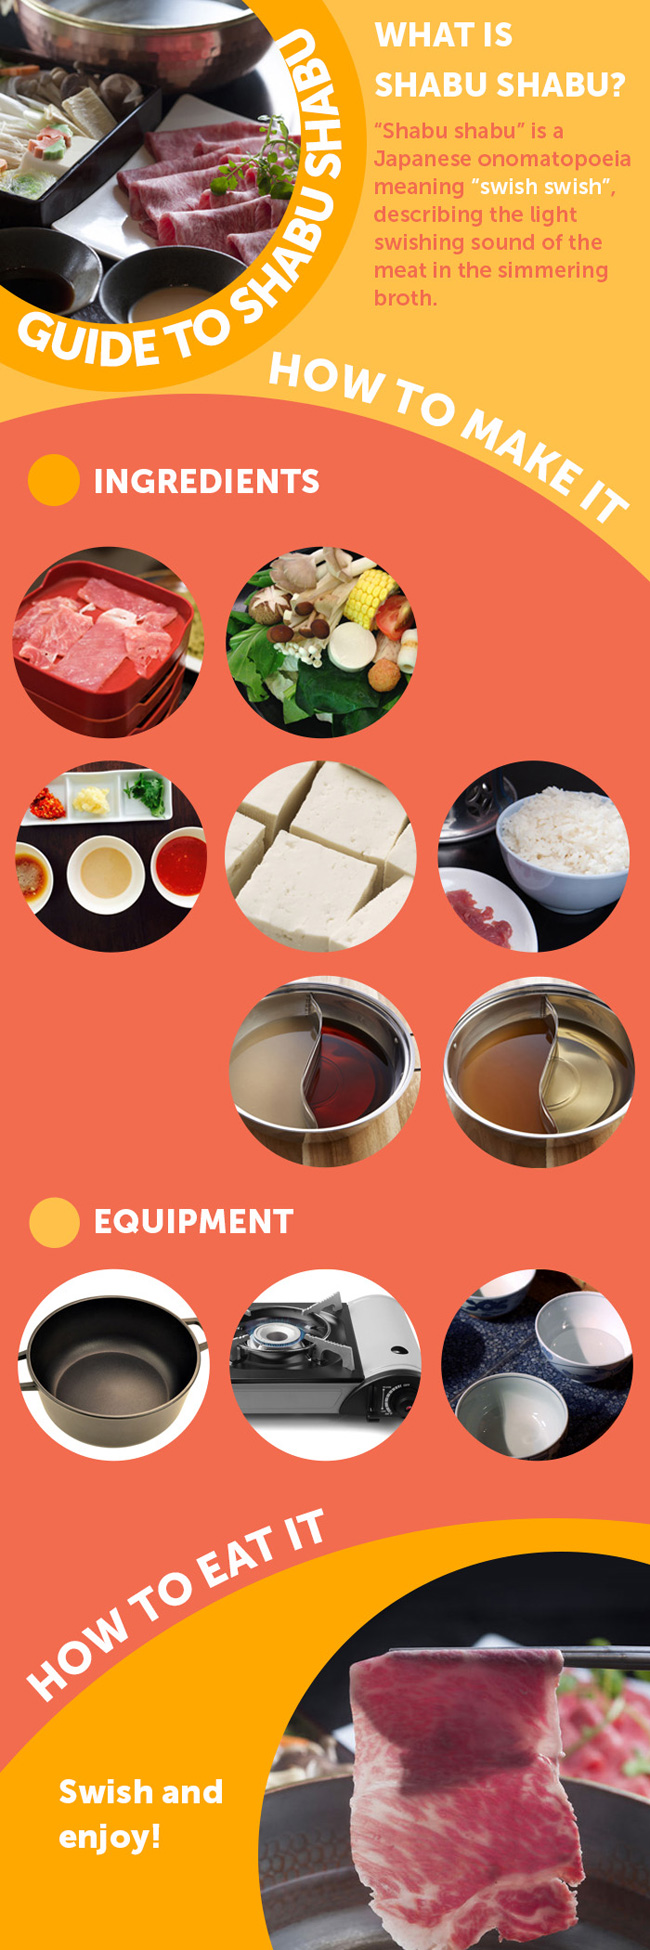 What is Shabu Shabu? A Guide to Japan's Swishiest Dish